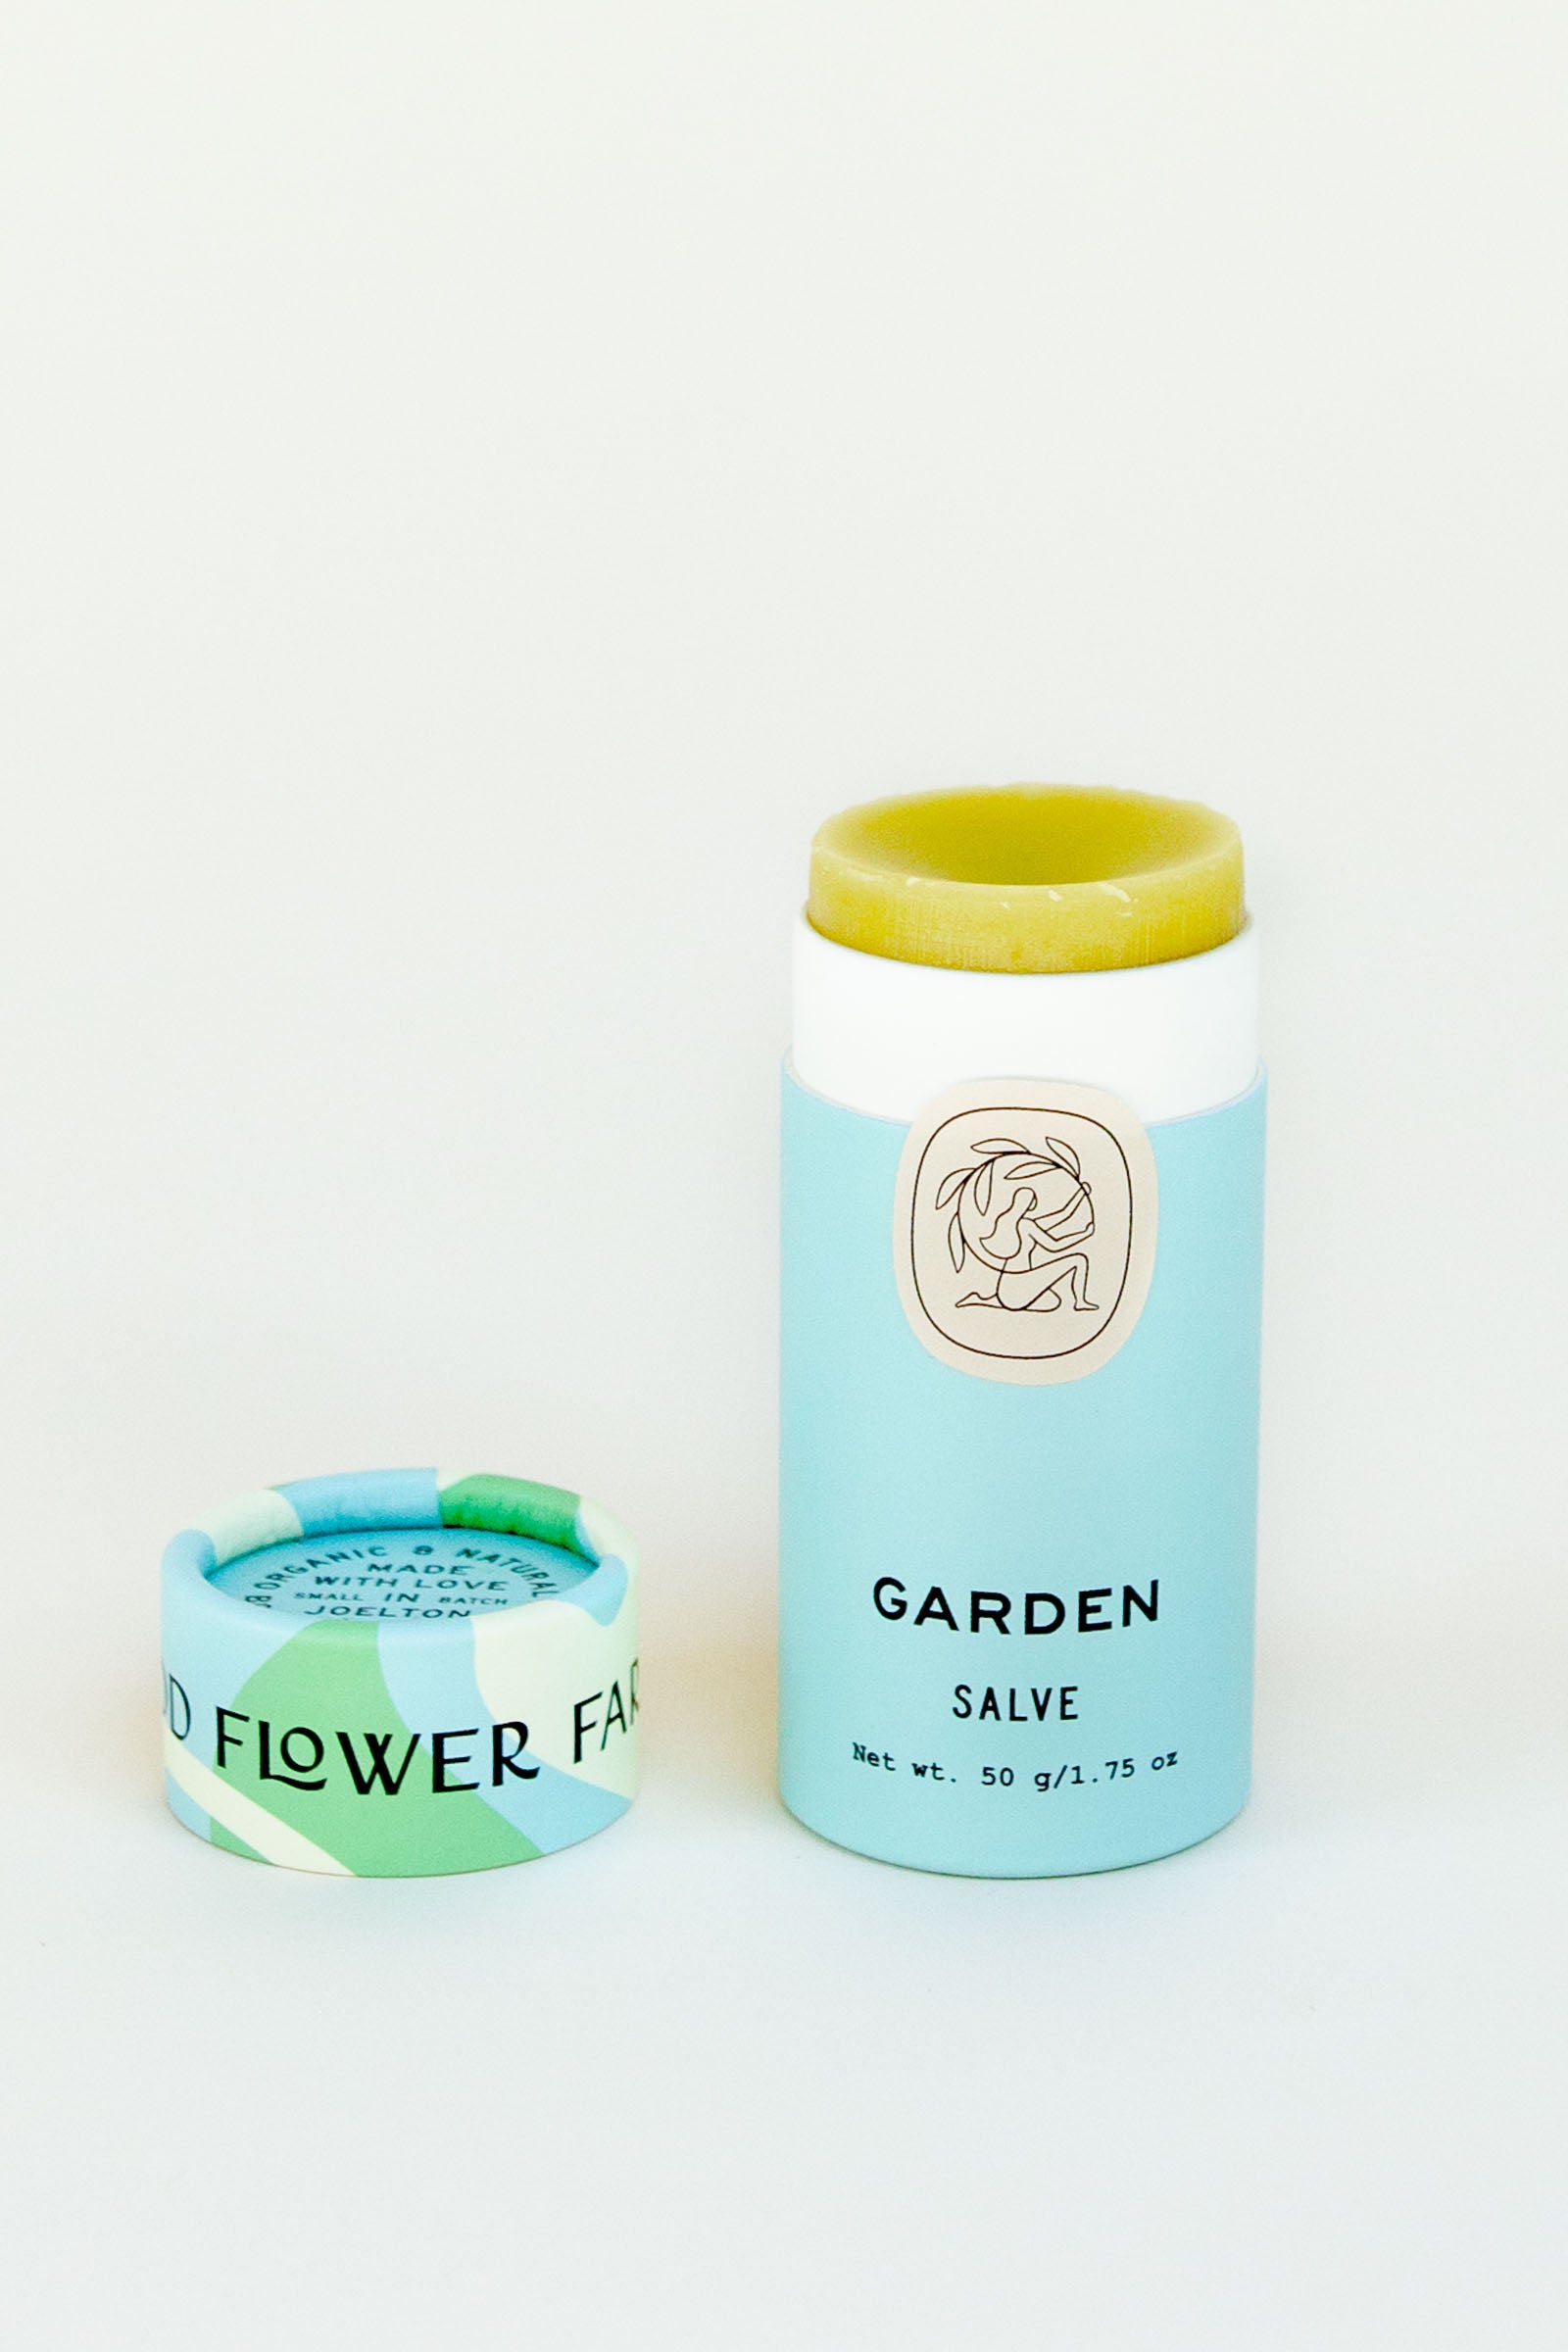 Organic herbal lavender lemongrass garden salve for hands, feet, elbows by Good Flower Farm